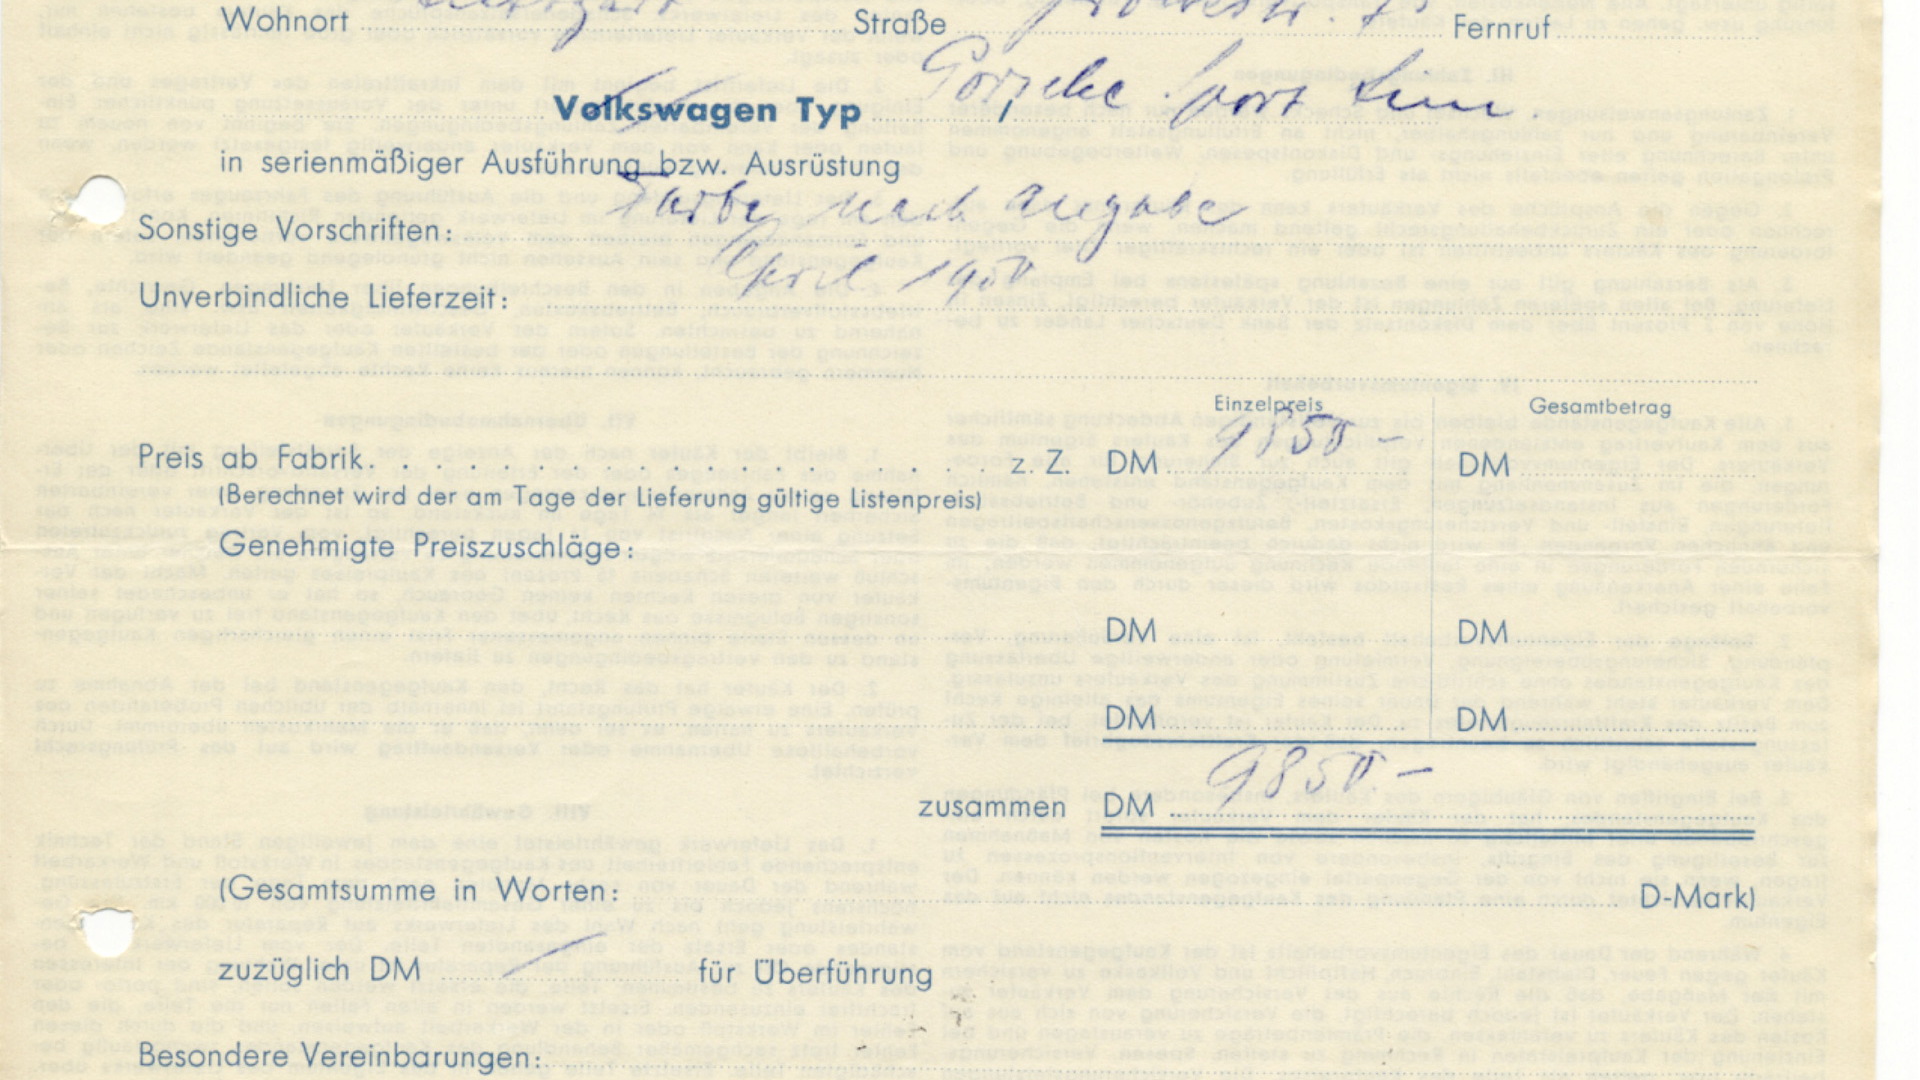 Ottomar Domnick's original order for the first customer Porsche filed Nov. 19, 1949